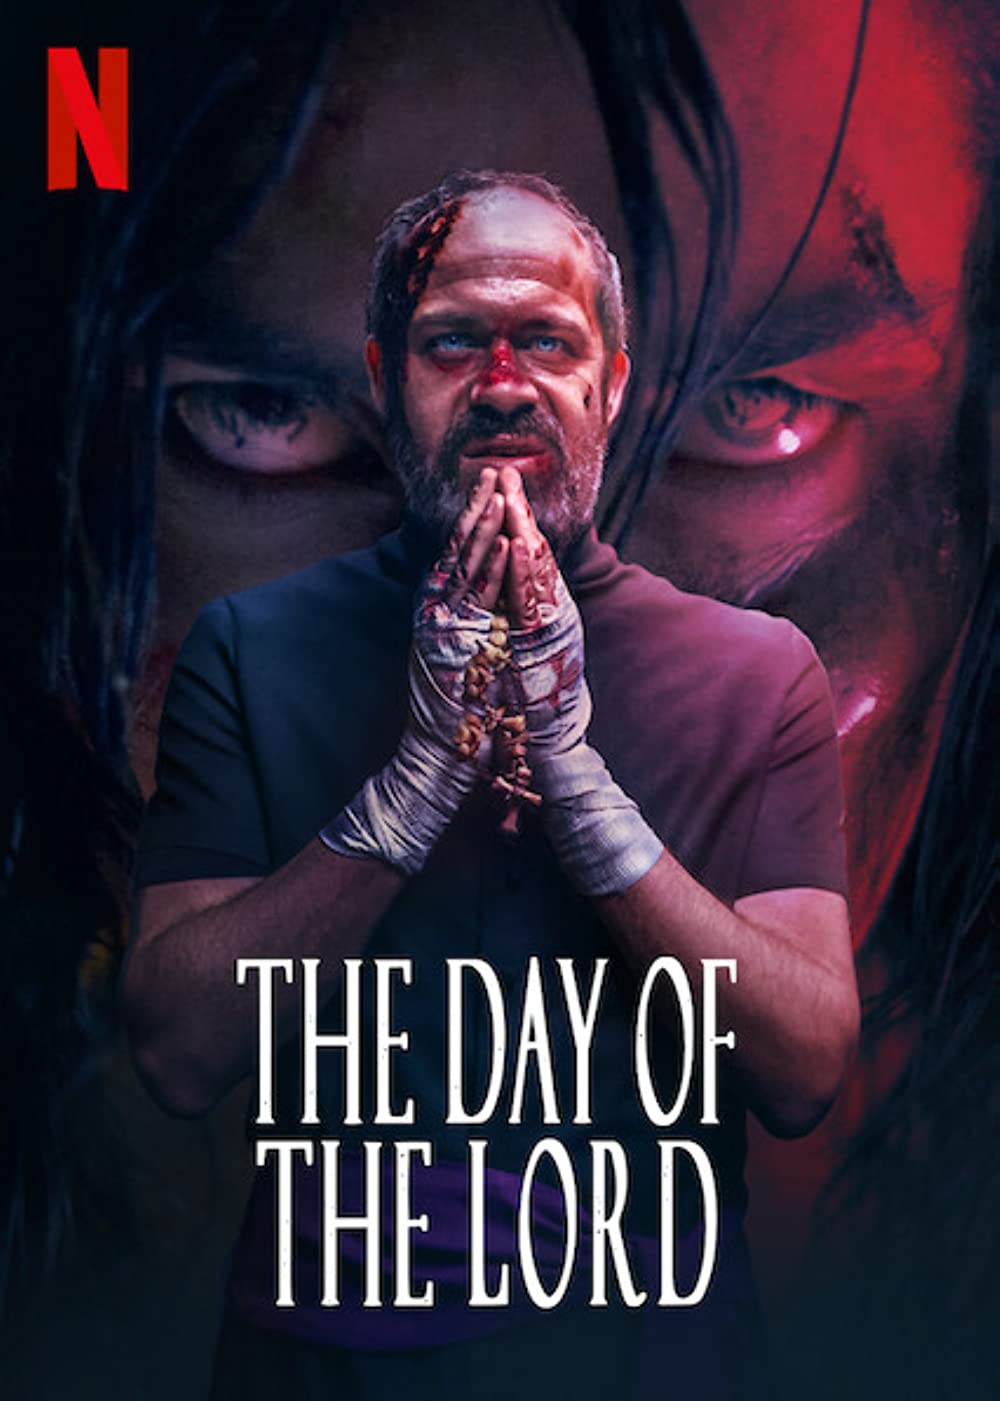 Filmbeschreibung zu The Day of the Lord